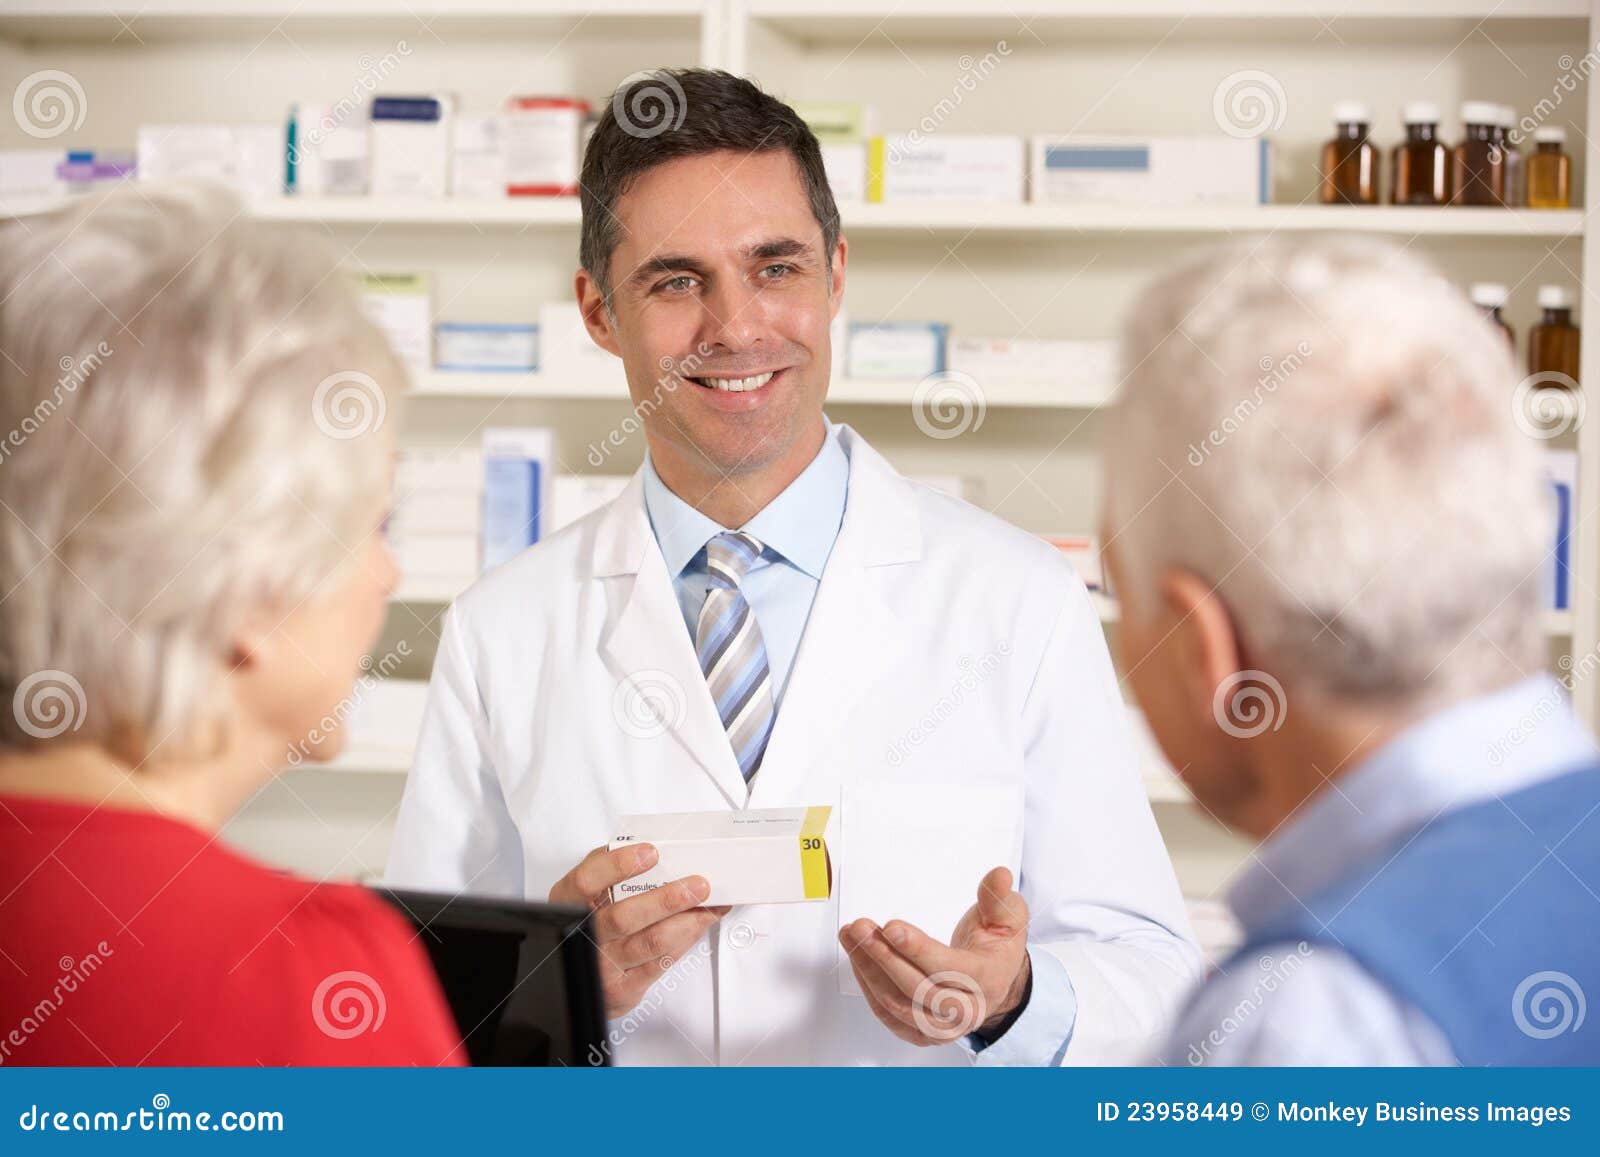 american pharmacist with senior couple in pharmacy